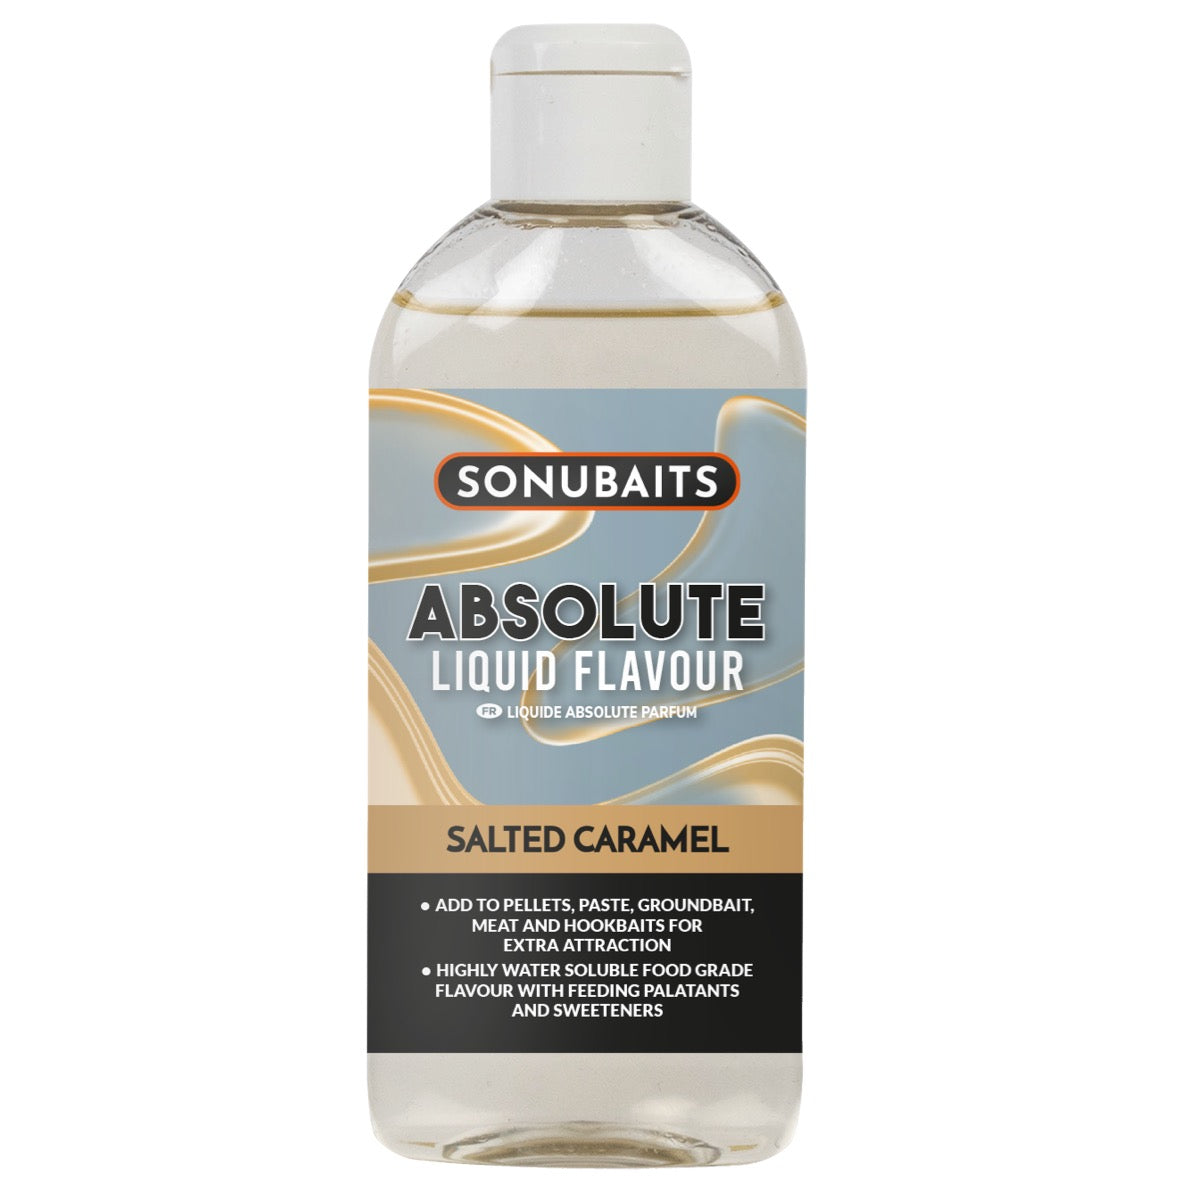 Sonubaits absolute liquid flavour Salted Caramel